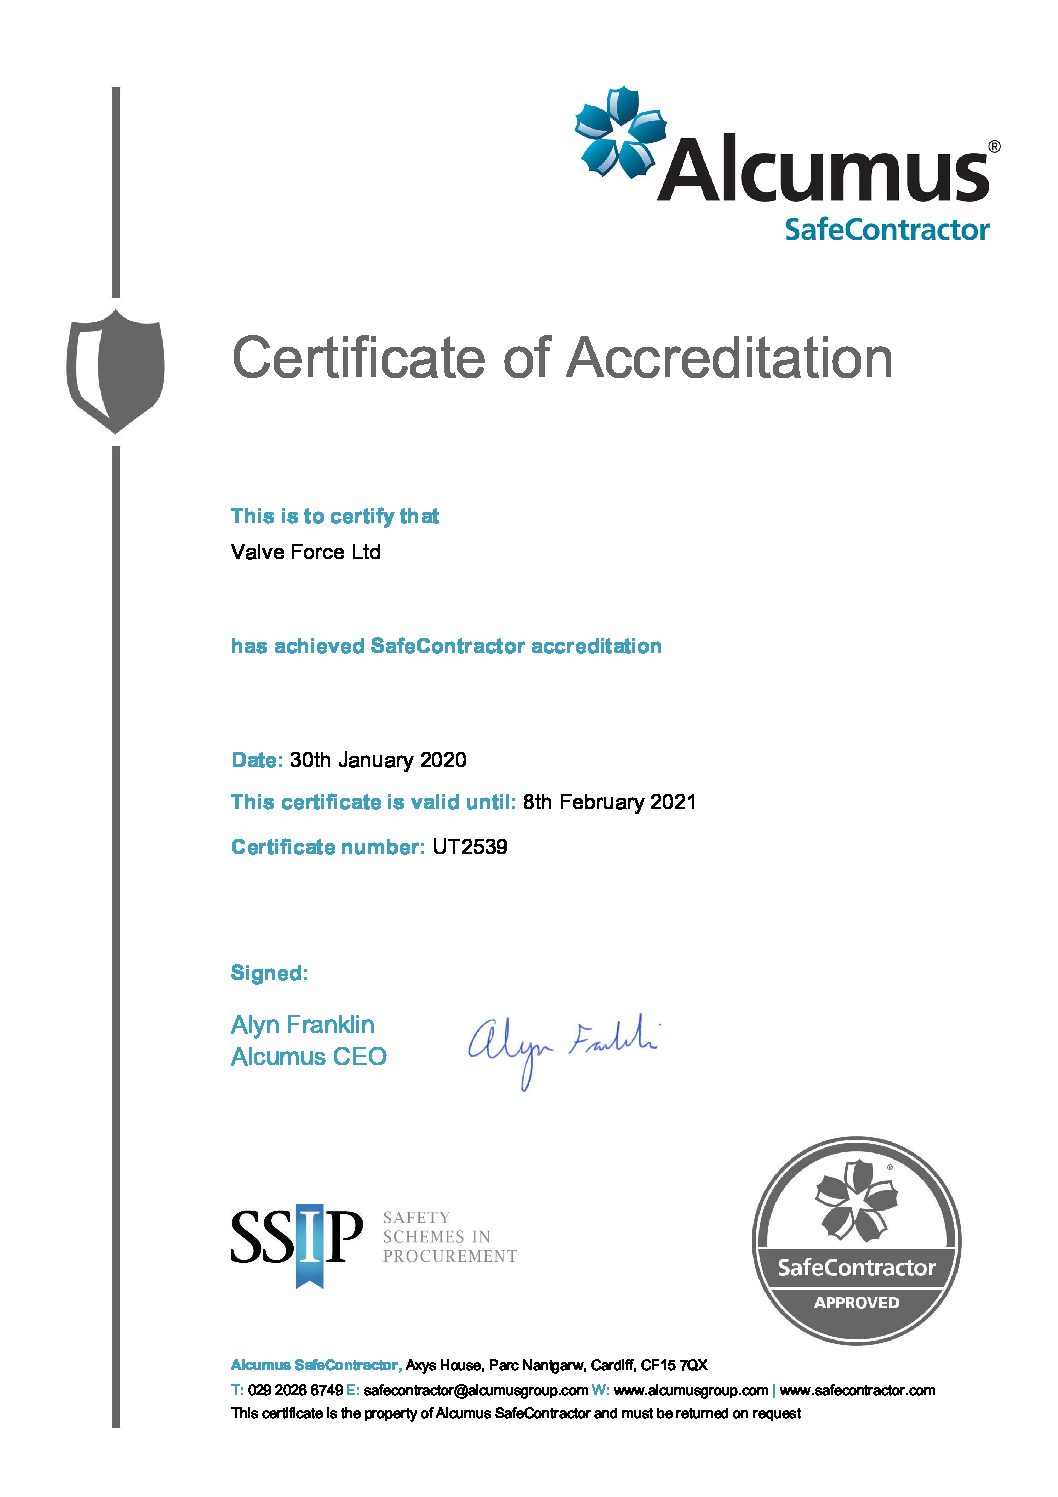 SafeContractor-Certificate-30012020-exp-08.02.2021-1-pdf.jpg